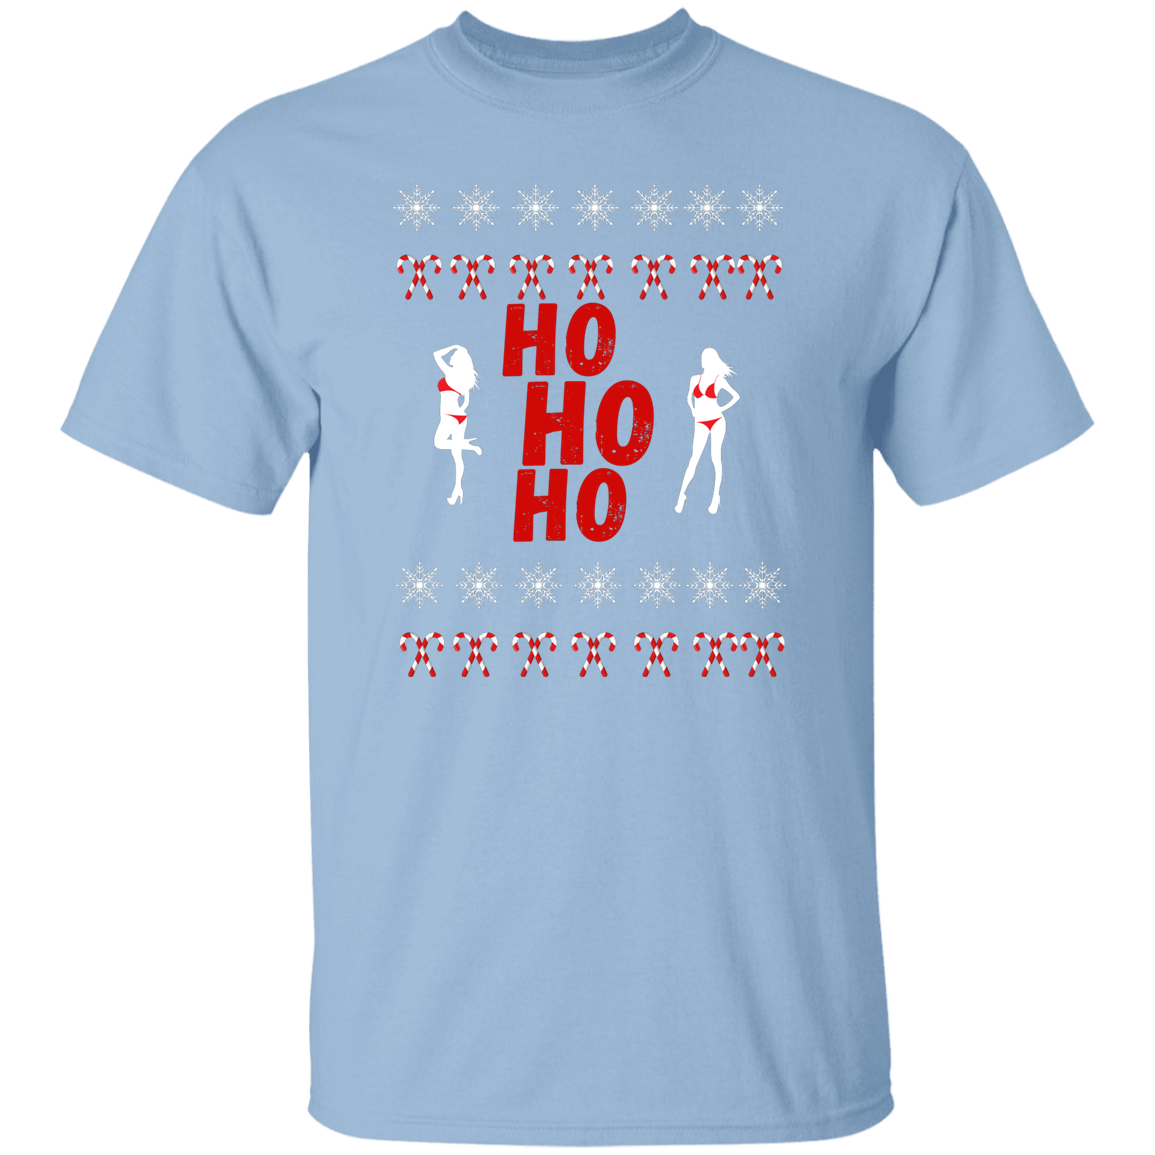 HOHOHO 5.3 oz. T-Shirt